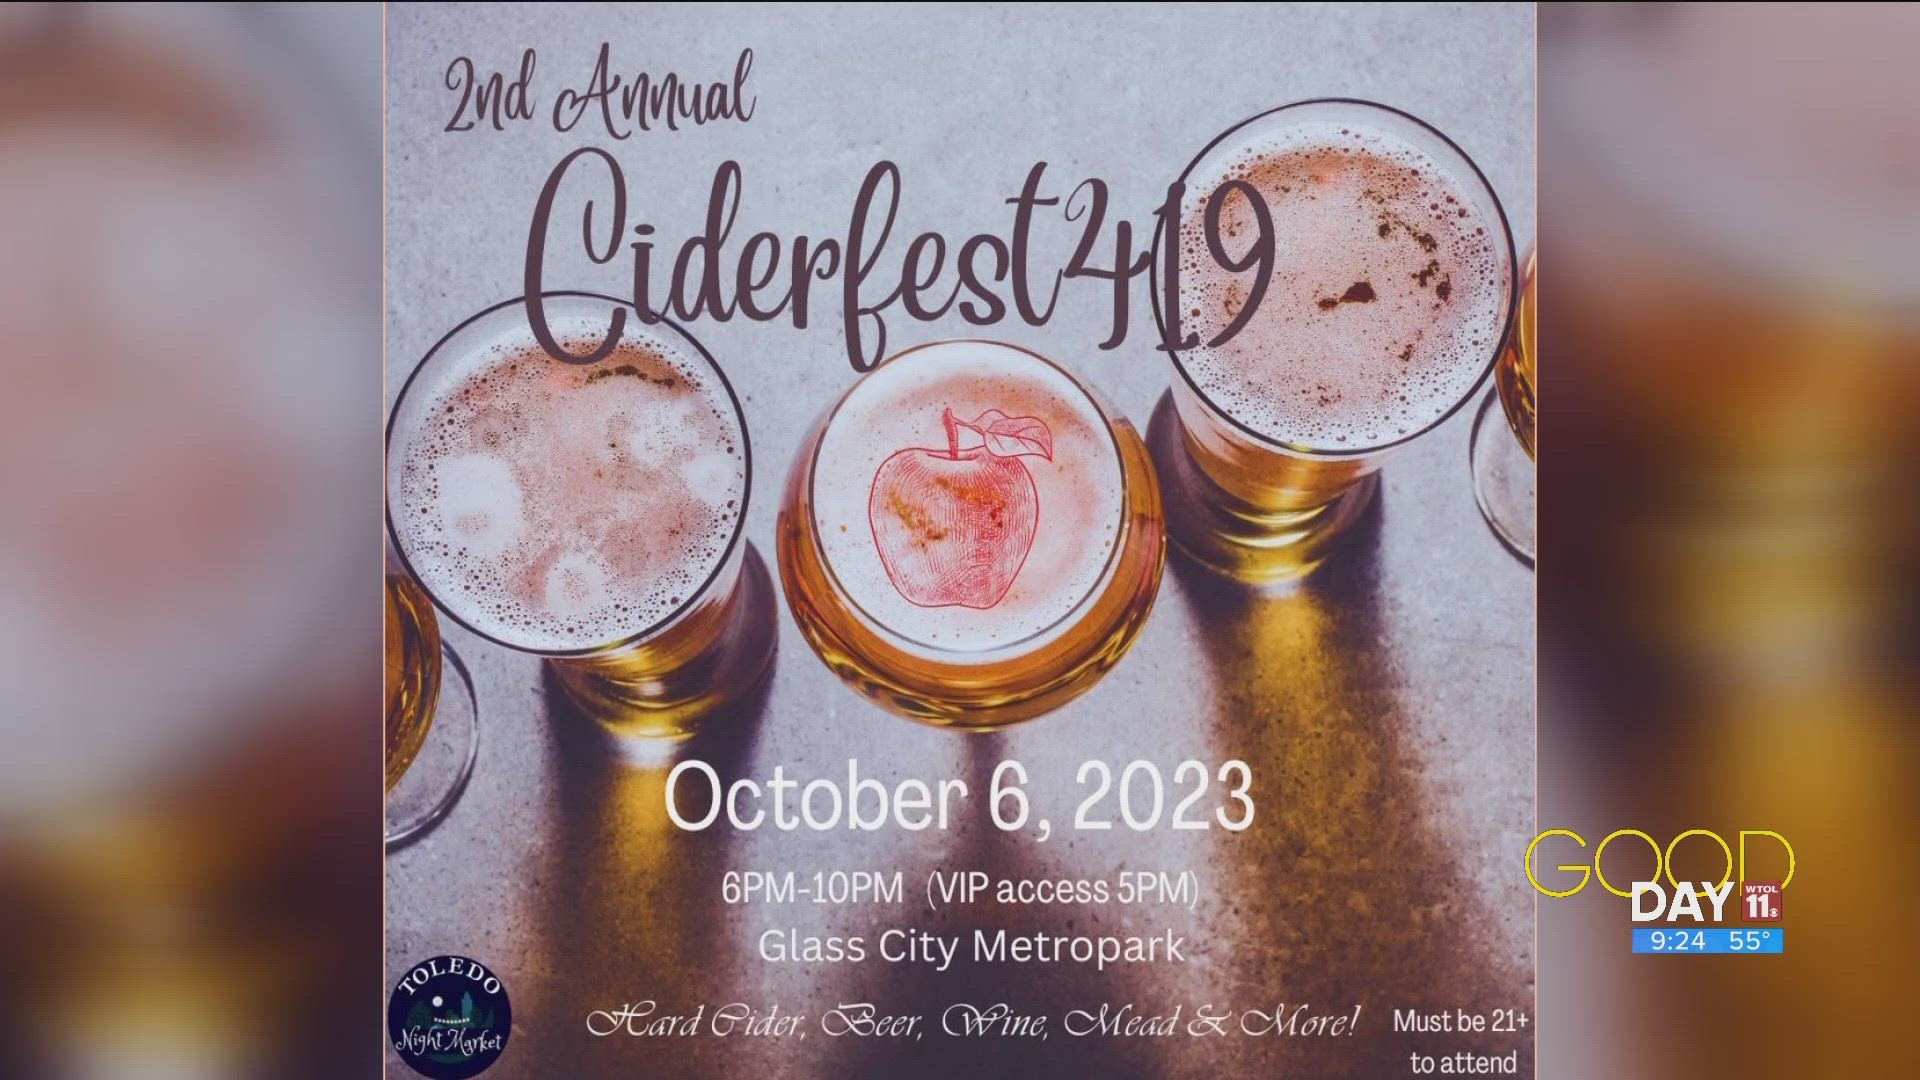 Kari Bucher and Fancy Moreland talk Ciderfest 419 at the Glass City Metropark on Oct. 6.